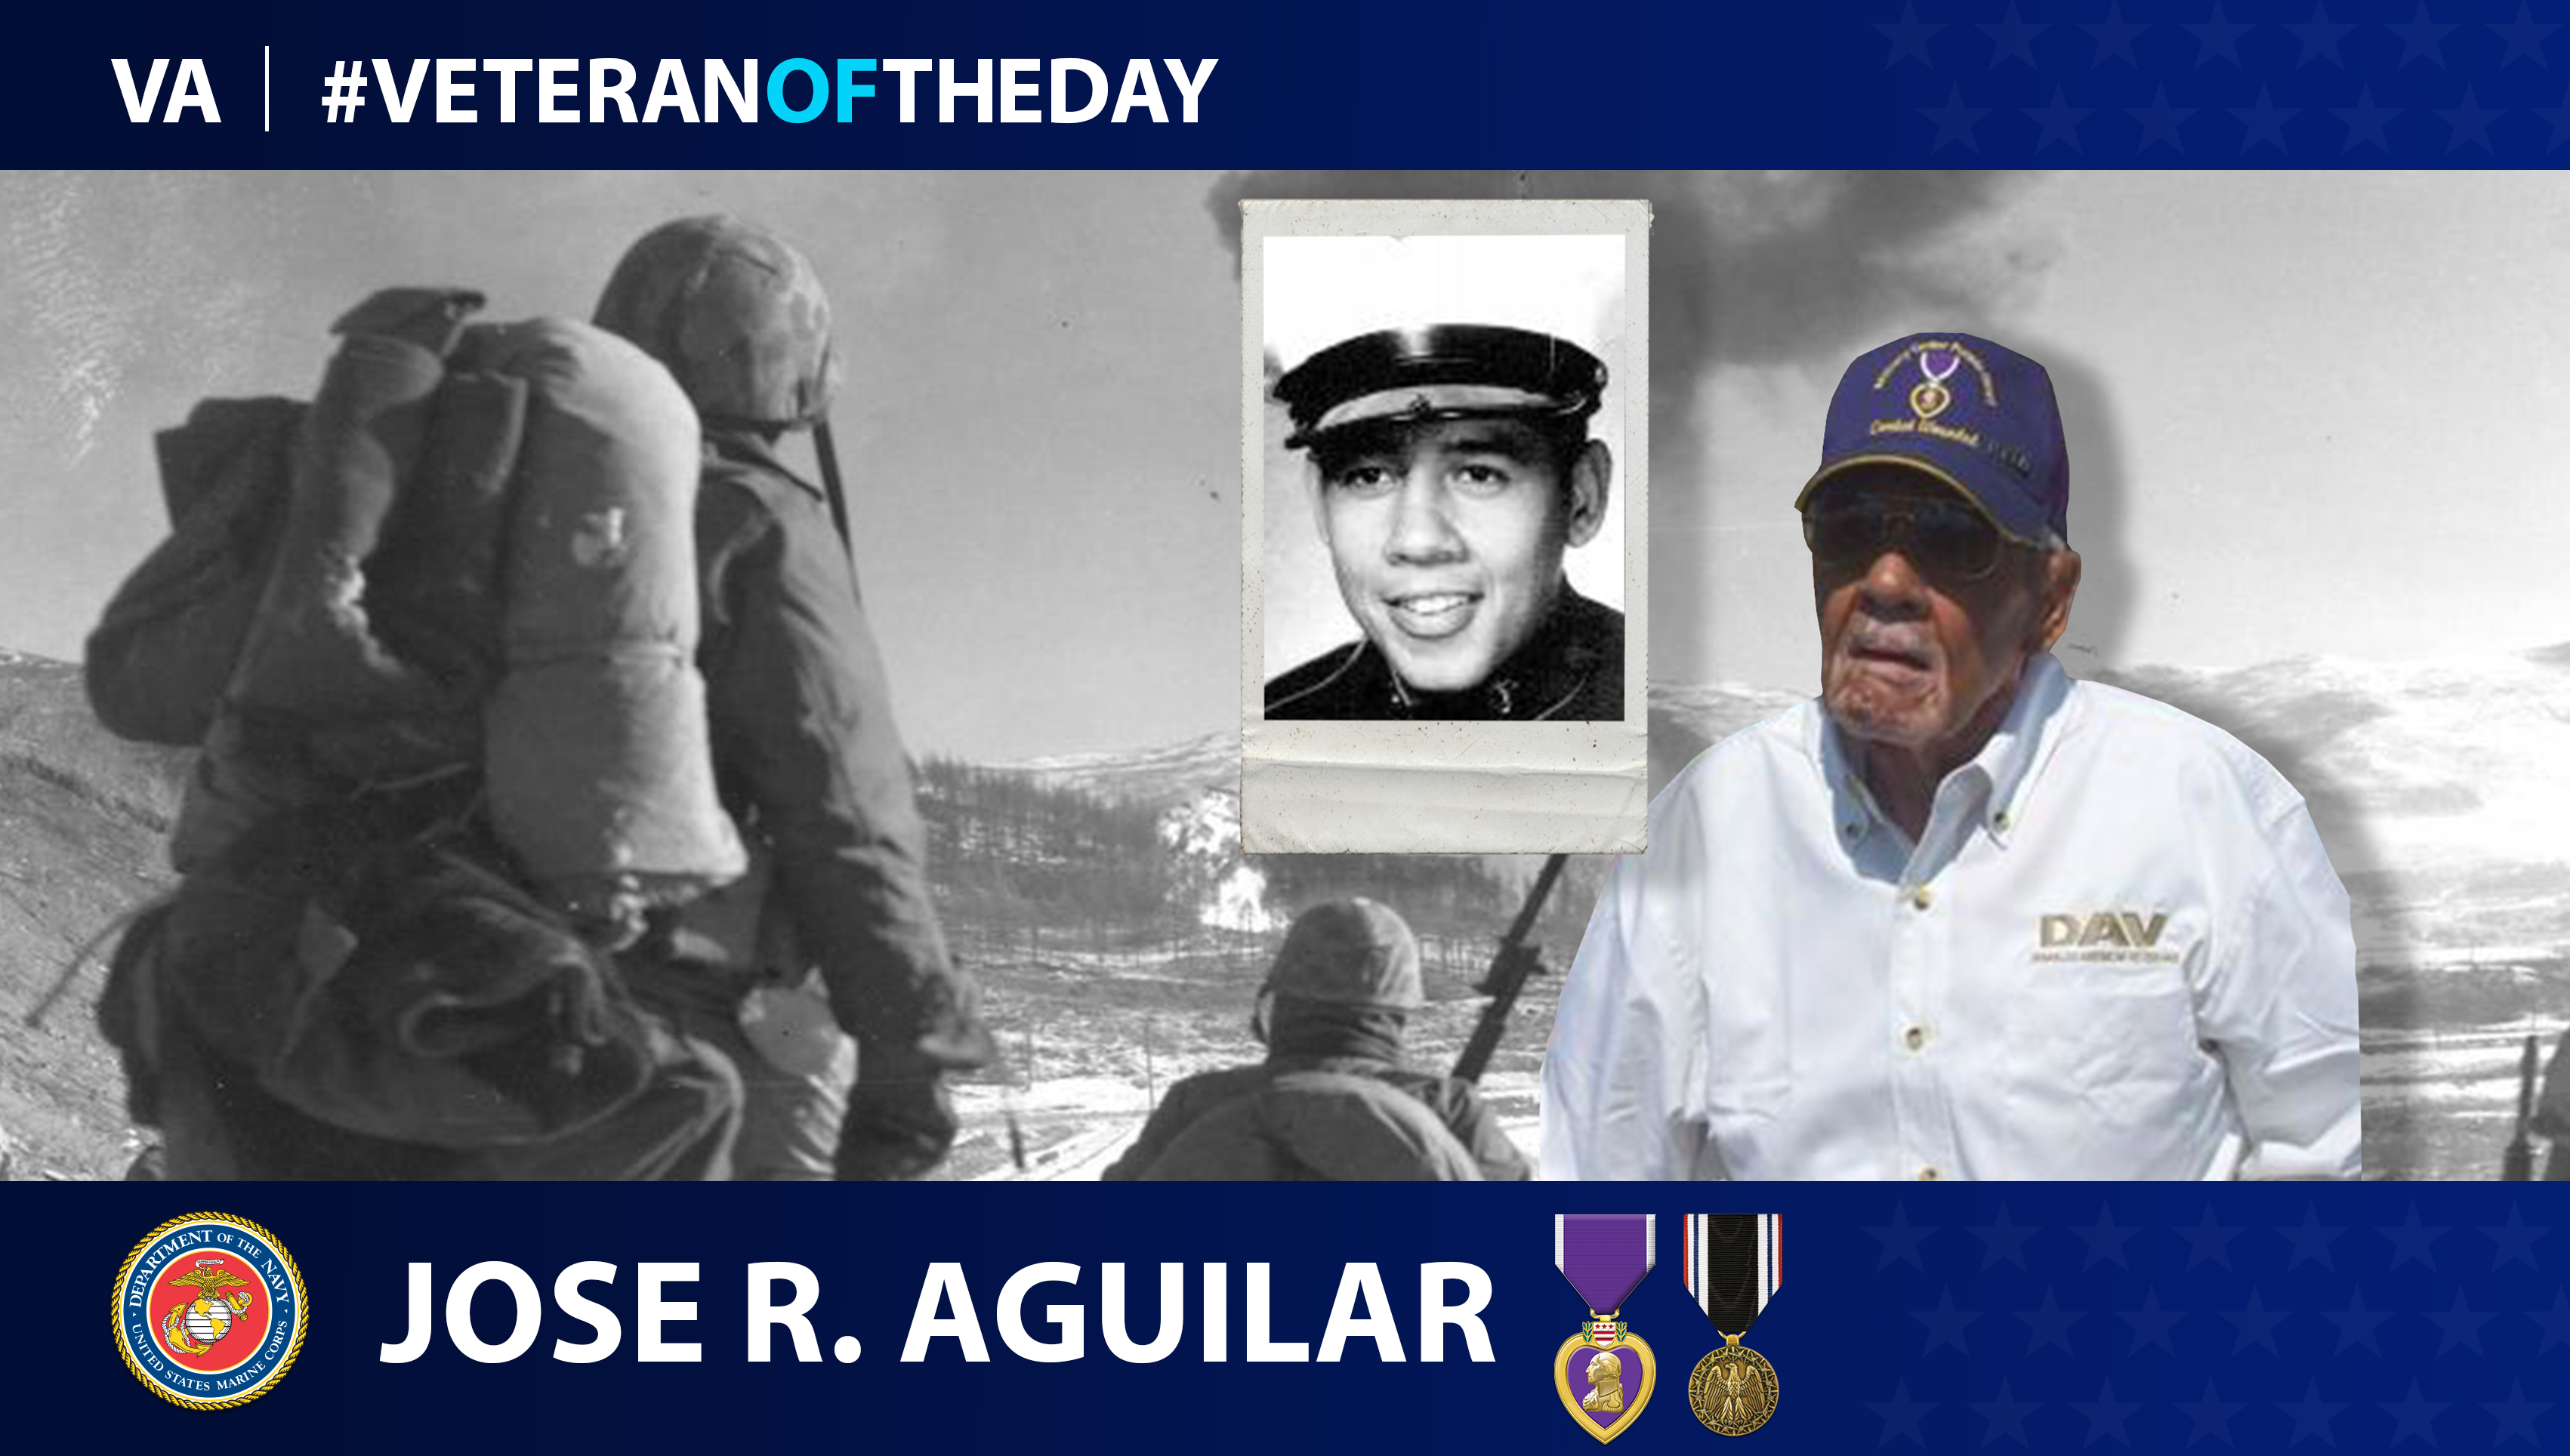 Marine Corps Veteran Jose Refugio Aguilar is today's Veteran of the Day.